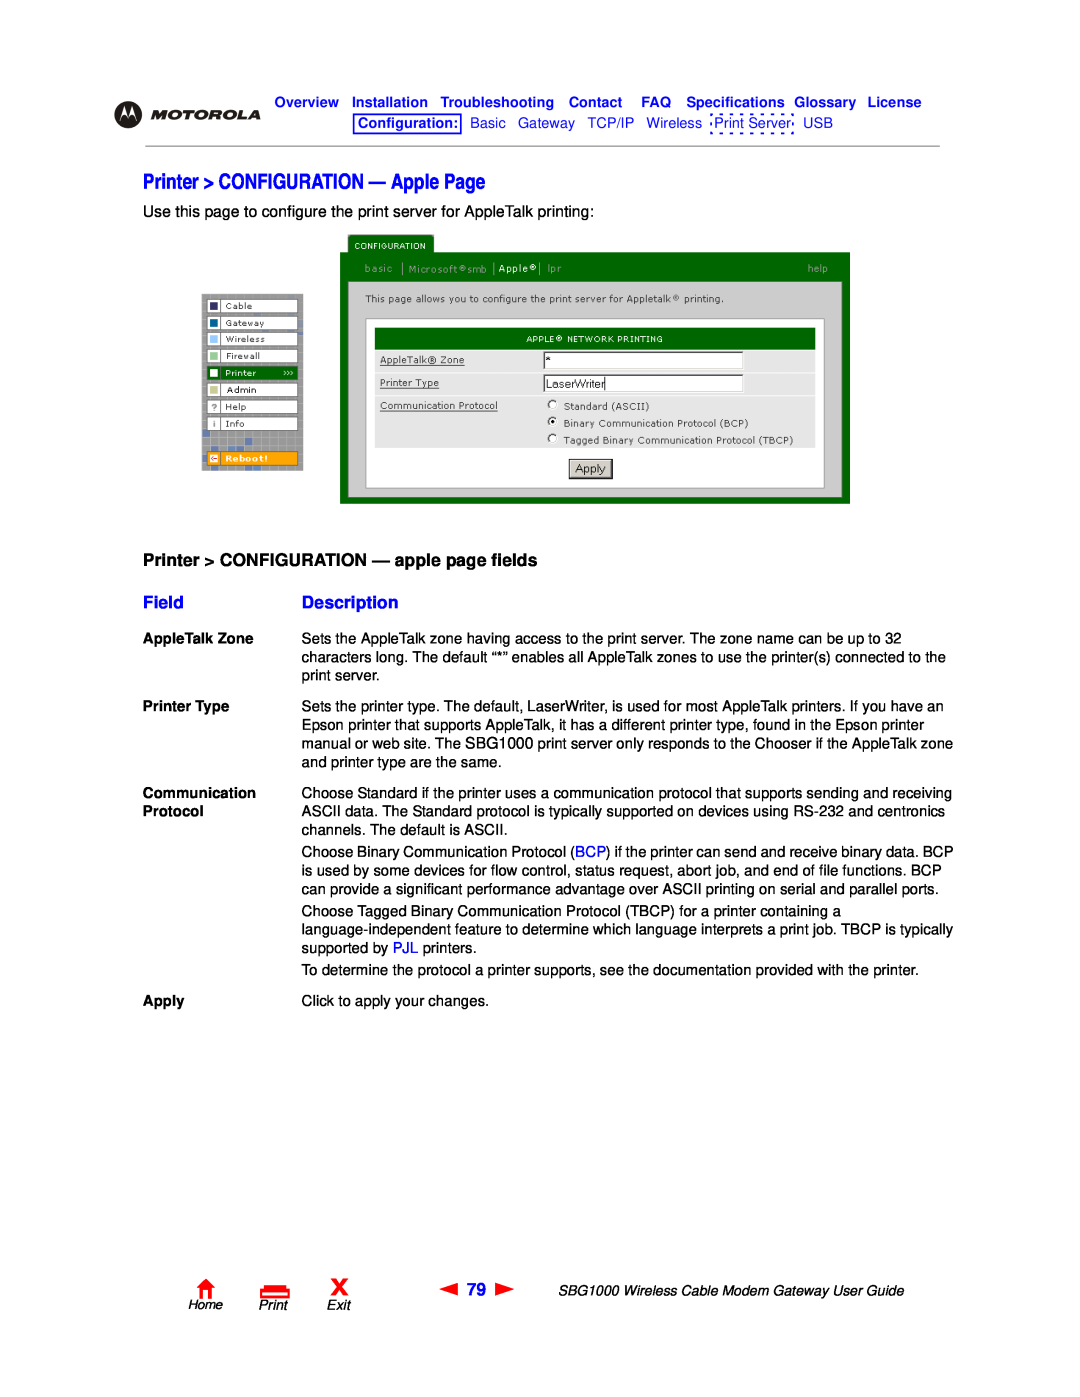 Motorola SBG1000 manual Printer CONFIGURATION - Apple Page, Printer CONFIGURATION - apple page fields, Field, Description 